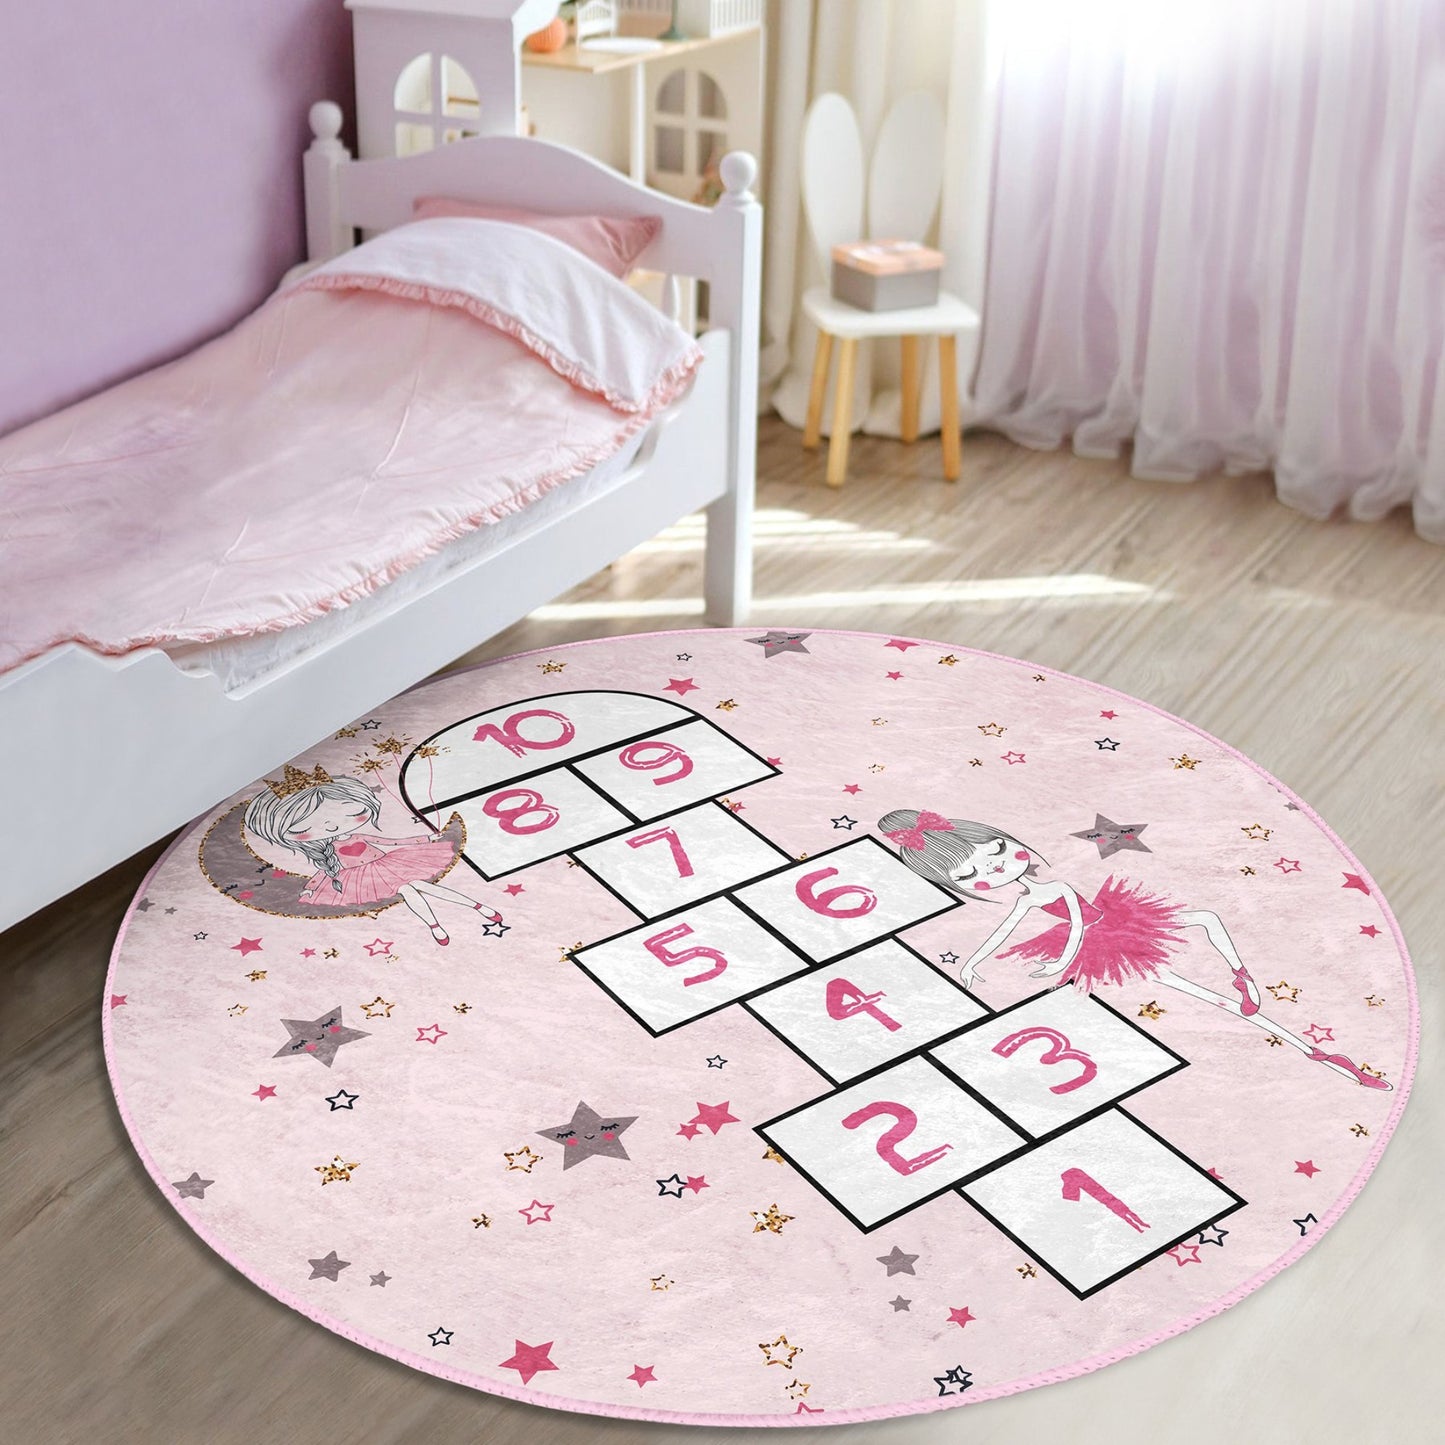 Playful Hopscotch Nursery Carpet - Whimsical Design